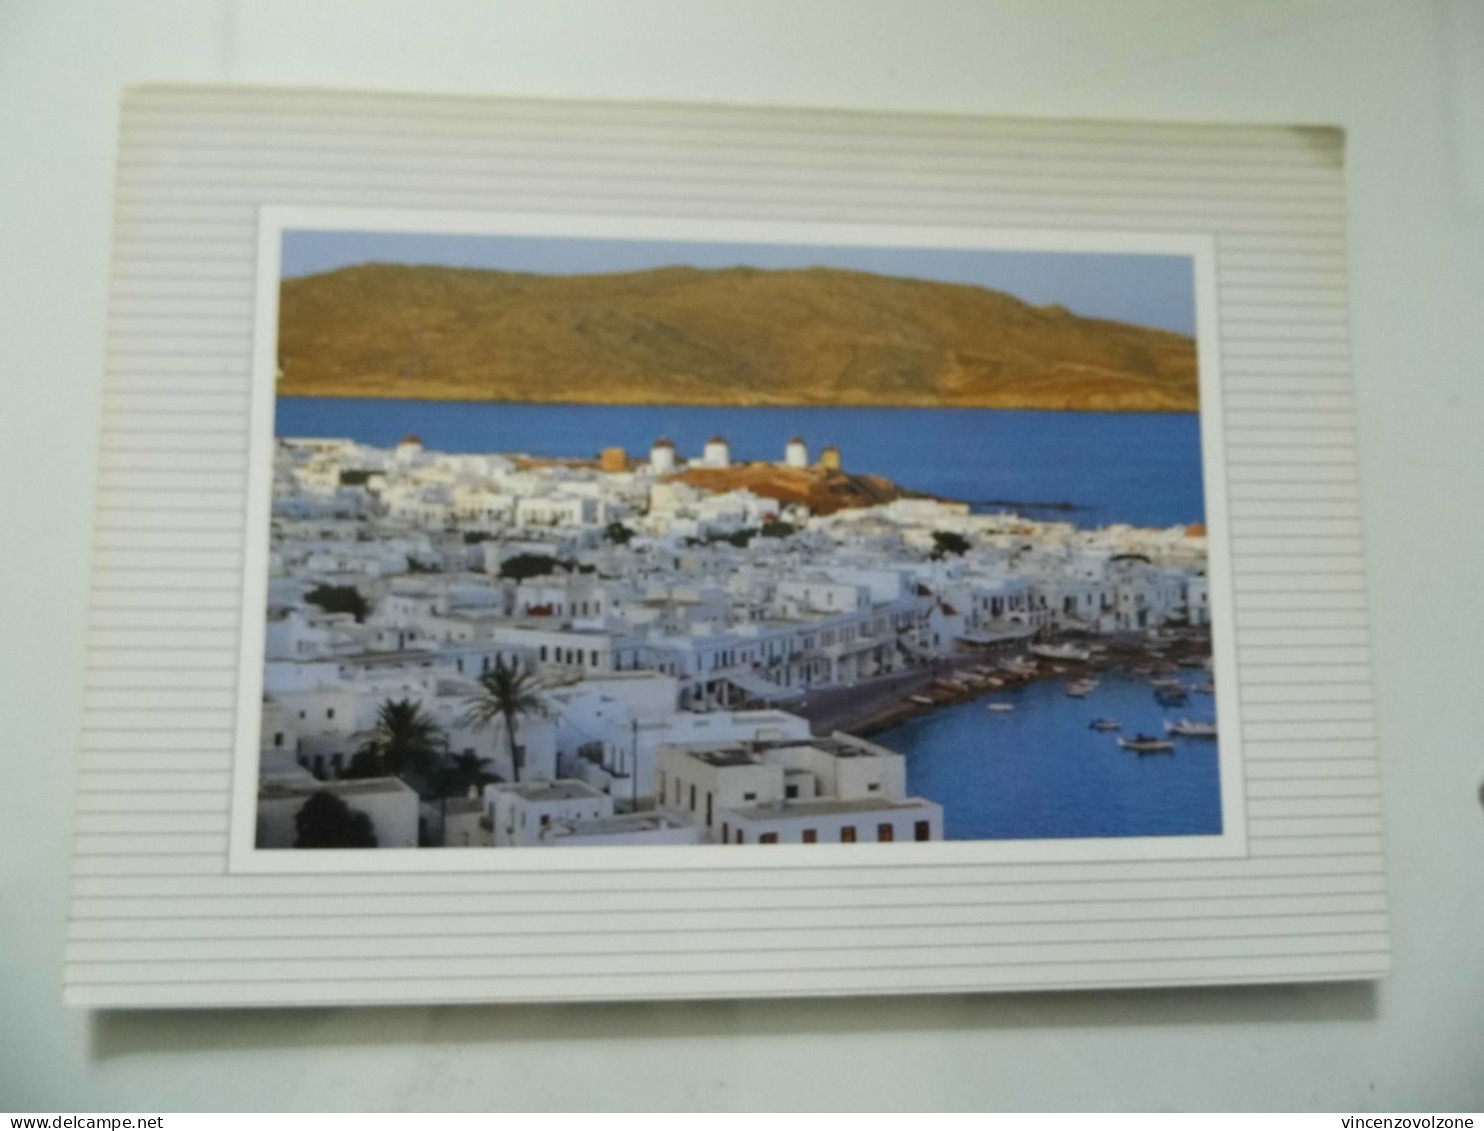 Cartolina Viaggiata "GREECE" 1988 - Grecia